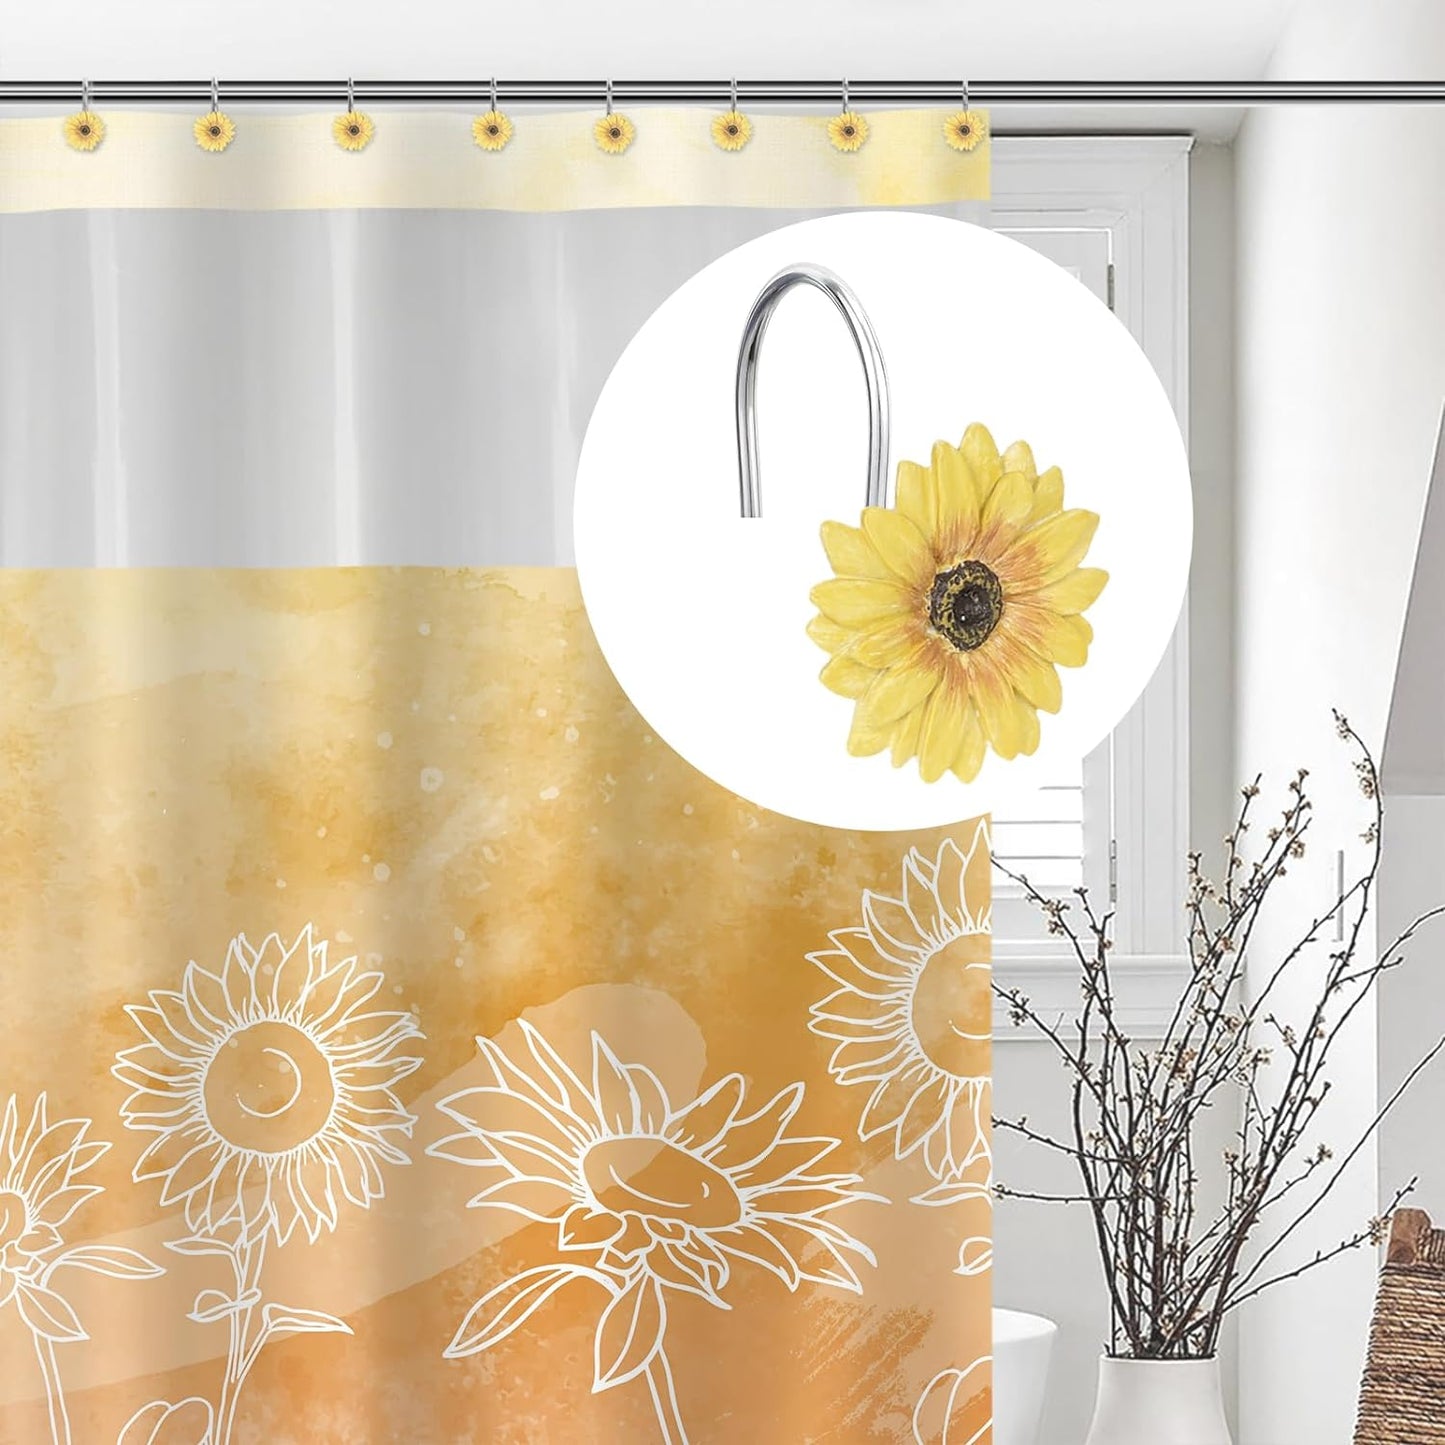 Sunlit Yellow Sunflower Shower Curtain Hooks, Home Decorative Shower Curtain Rings for Bathroom, Resin, Summer Floral Shower Curtain Hanger Hooks for Living Room, Set of 12